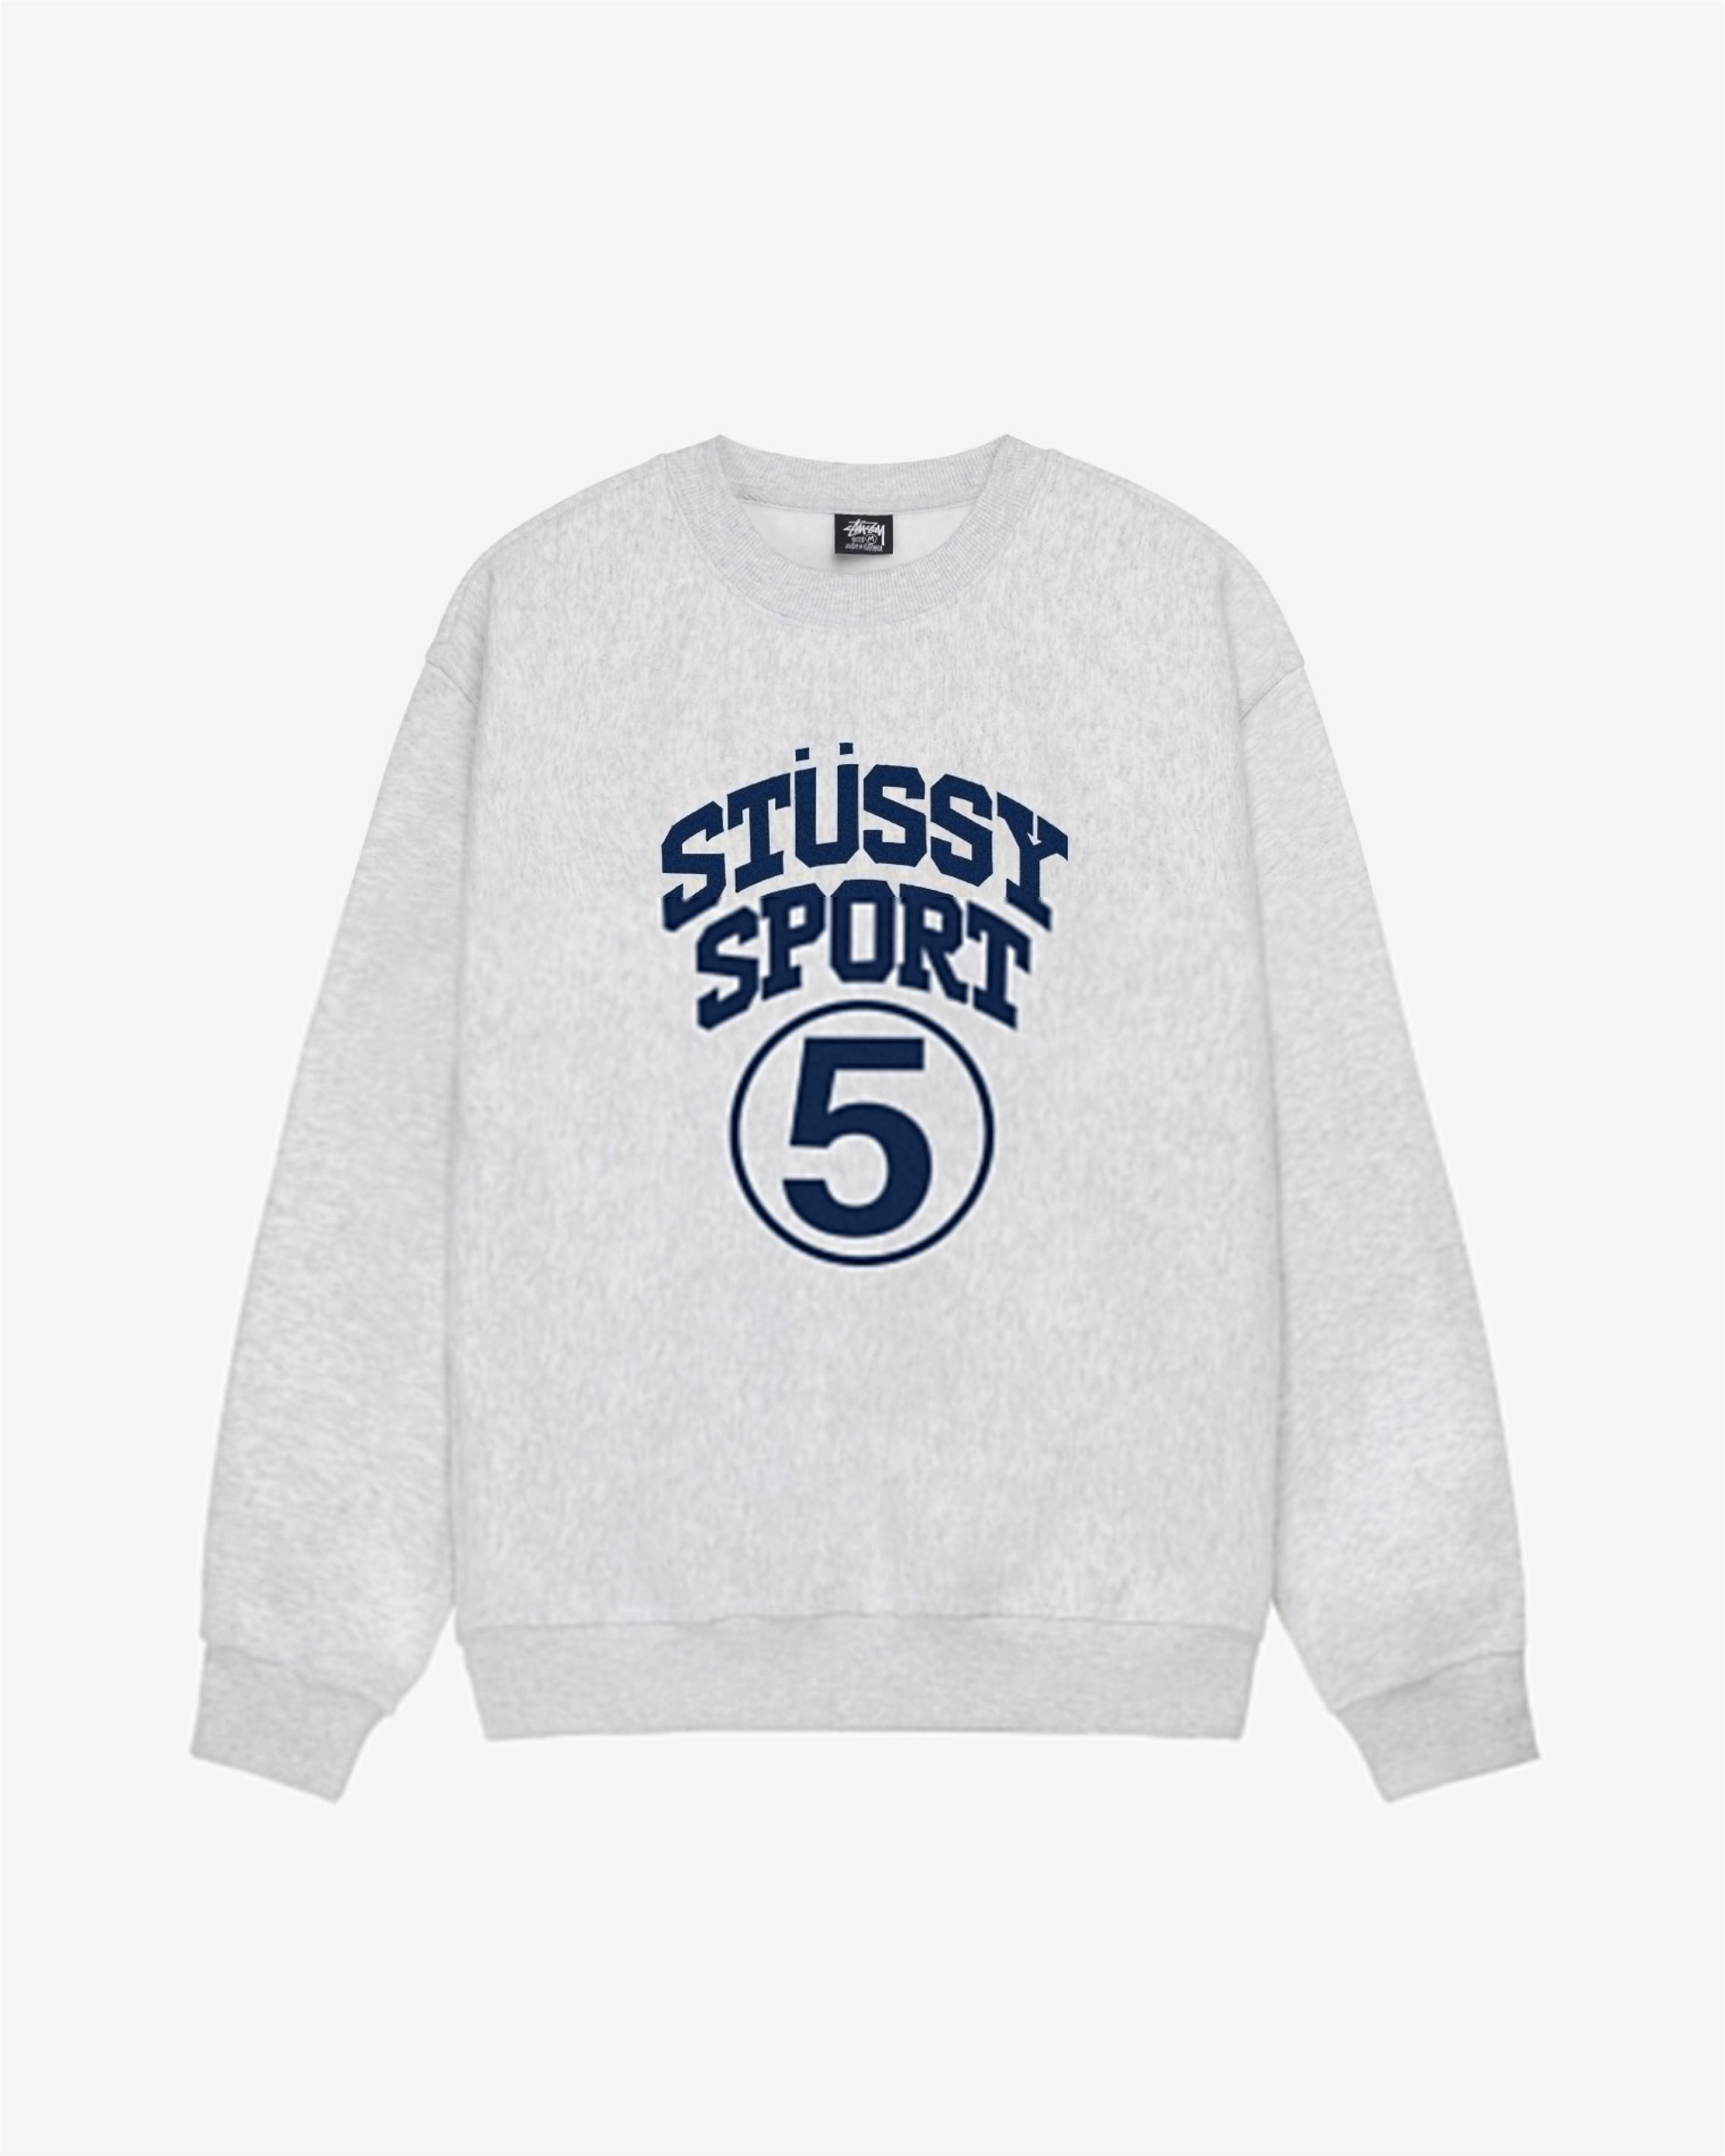 Stussy - Men's 5 Sport Crew - (Ash) by STUSSY